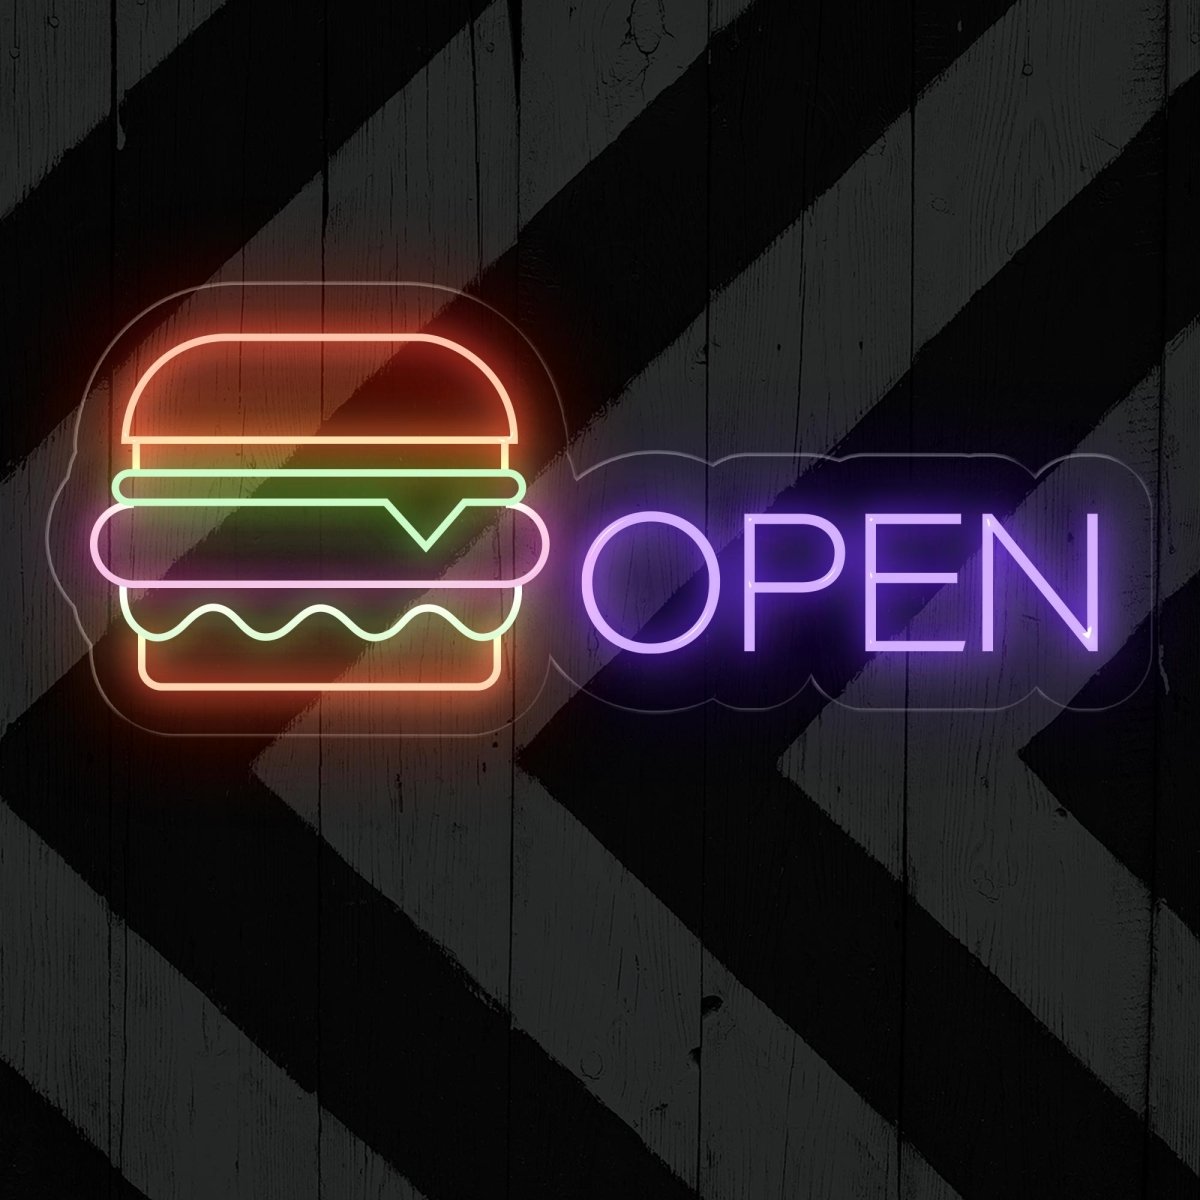 Neon Burger Open Sign - Led Neon Light For Burger Place - NEONXPERT